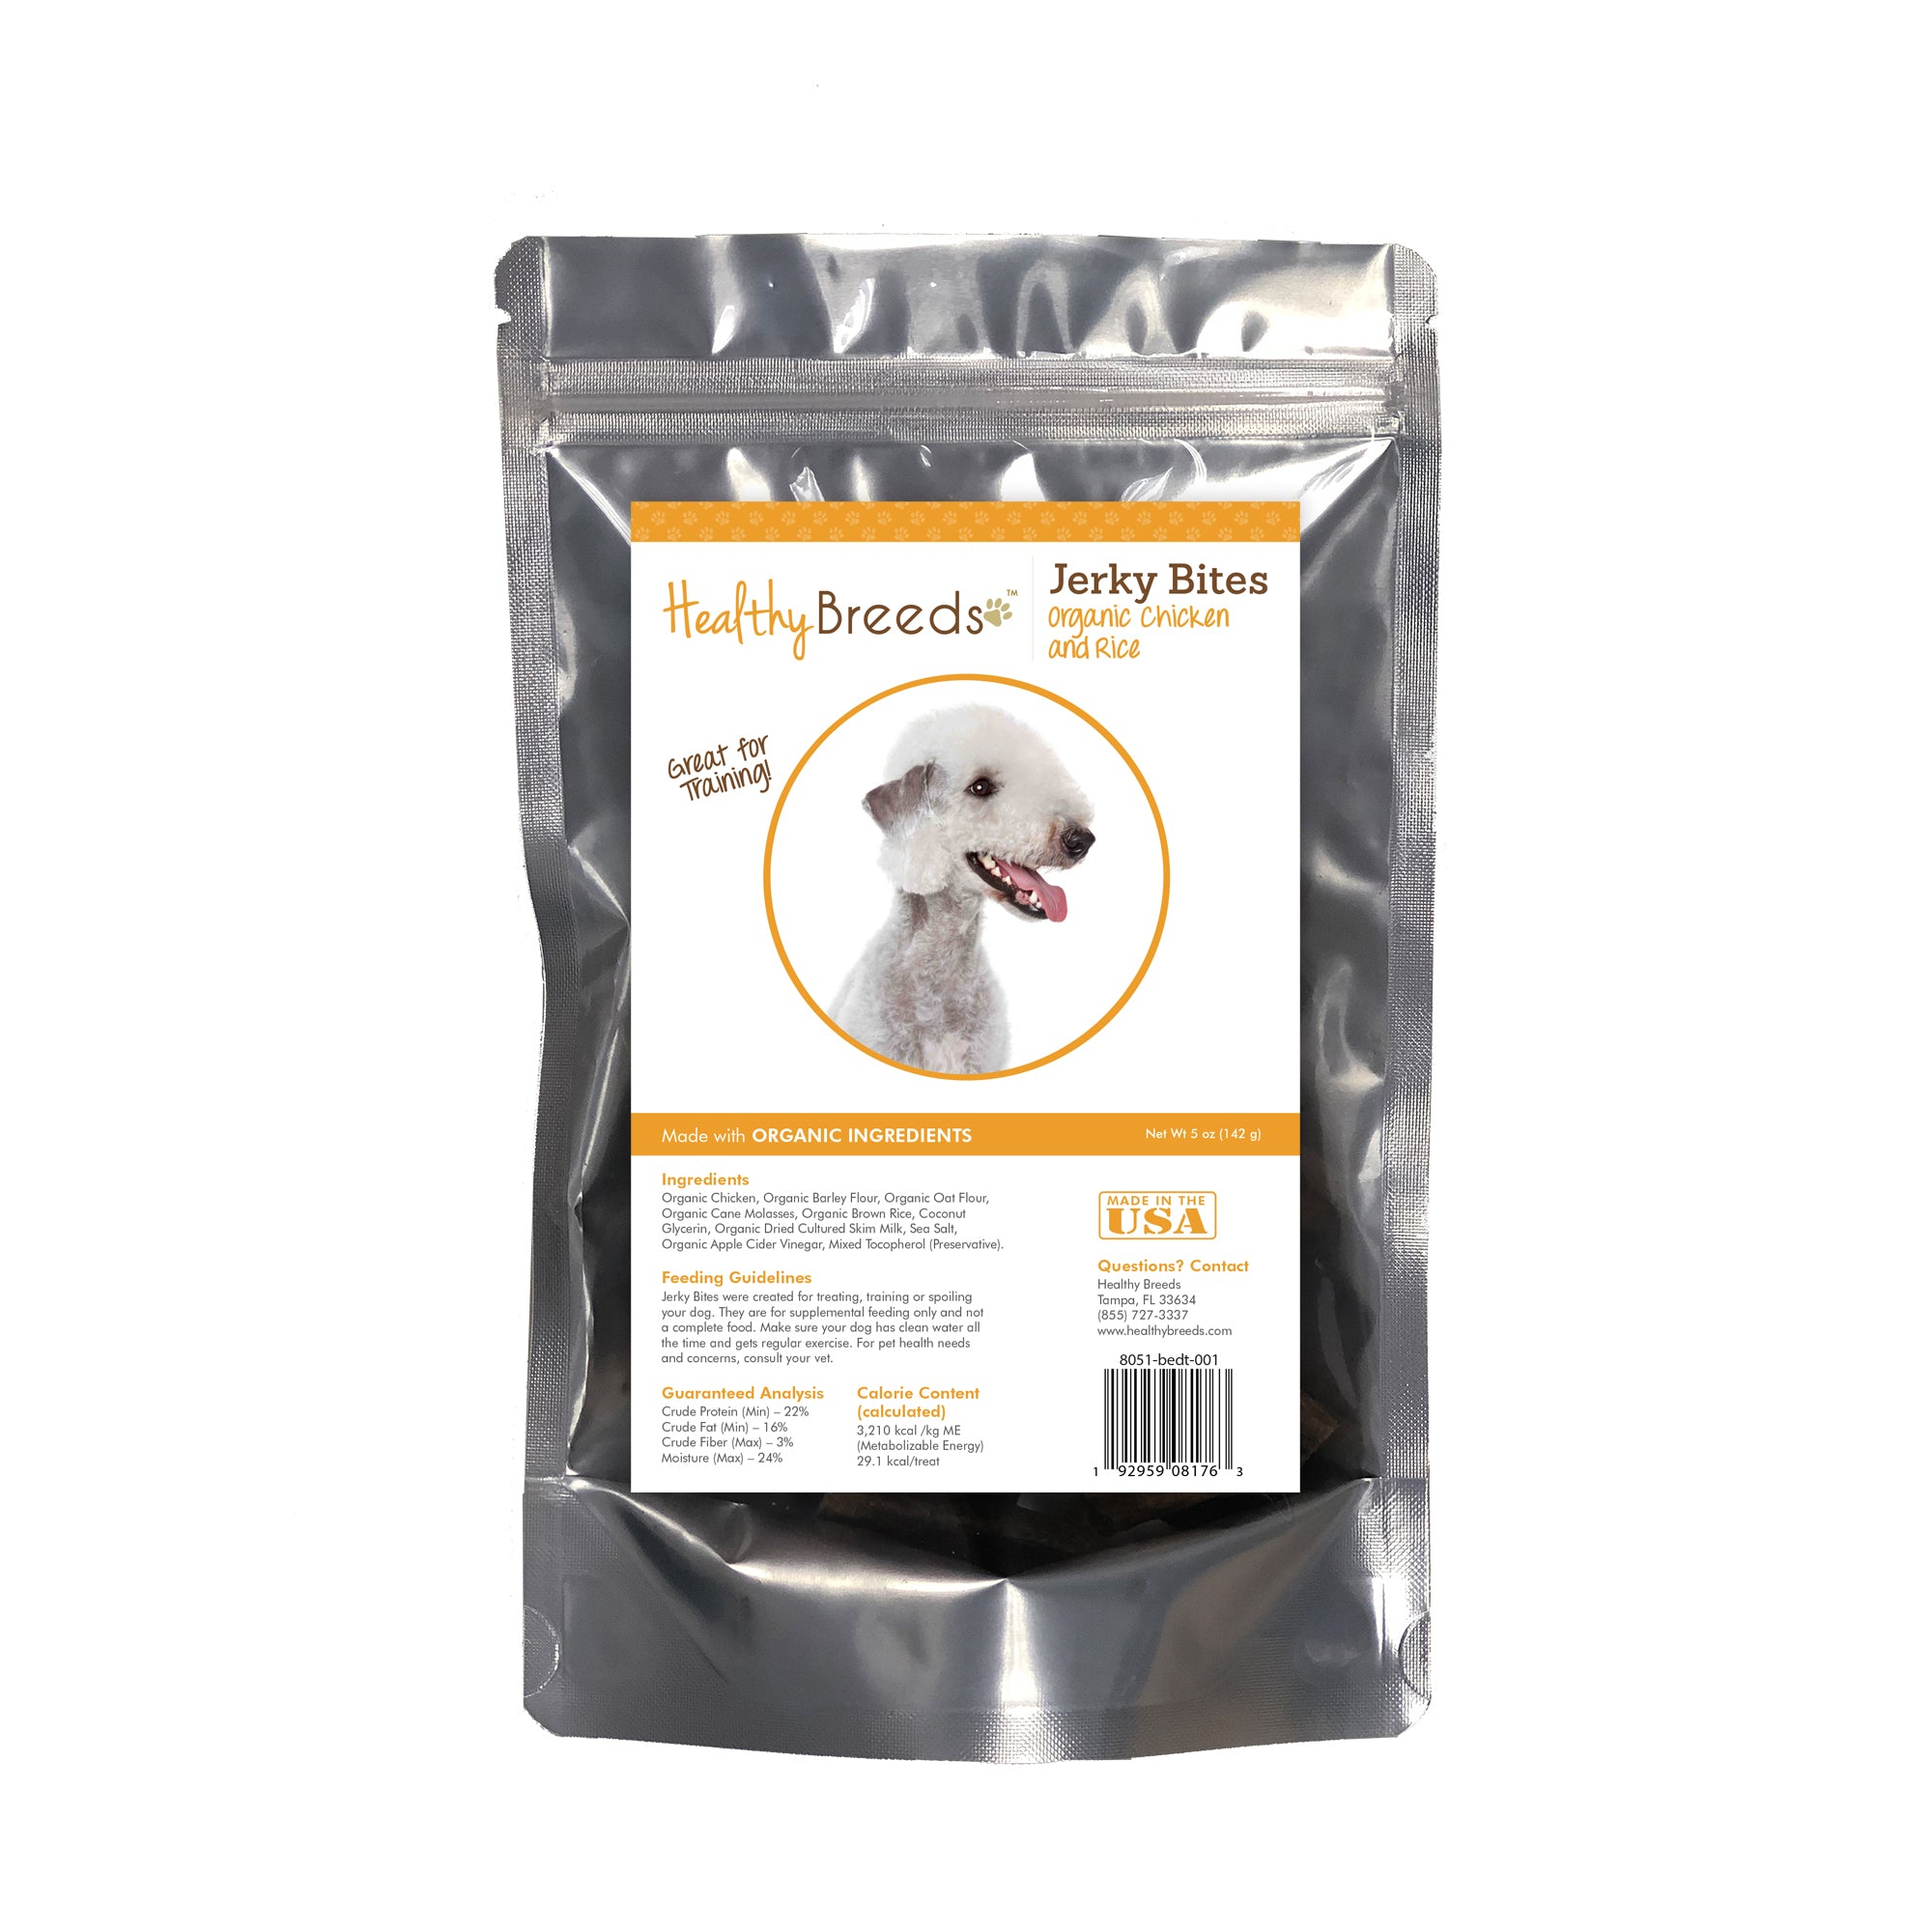 Bedlington Terrier Jerky Bites Chicken & Rice Recipe Dog Treats 5 oz